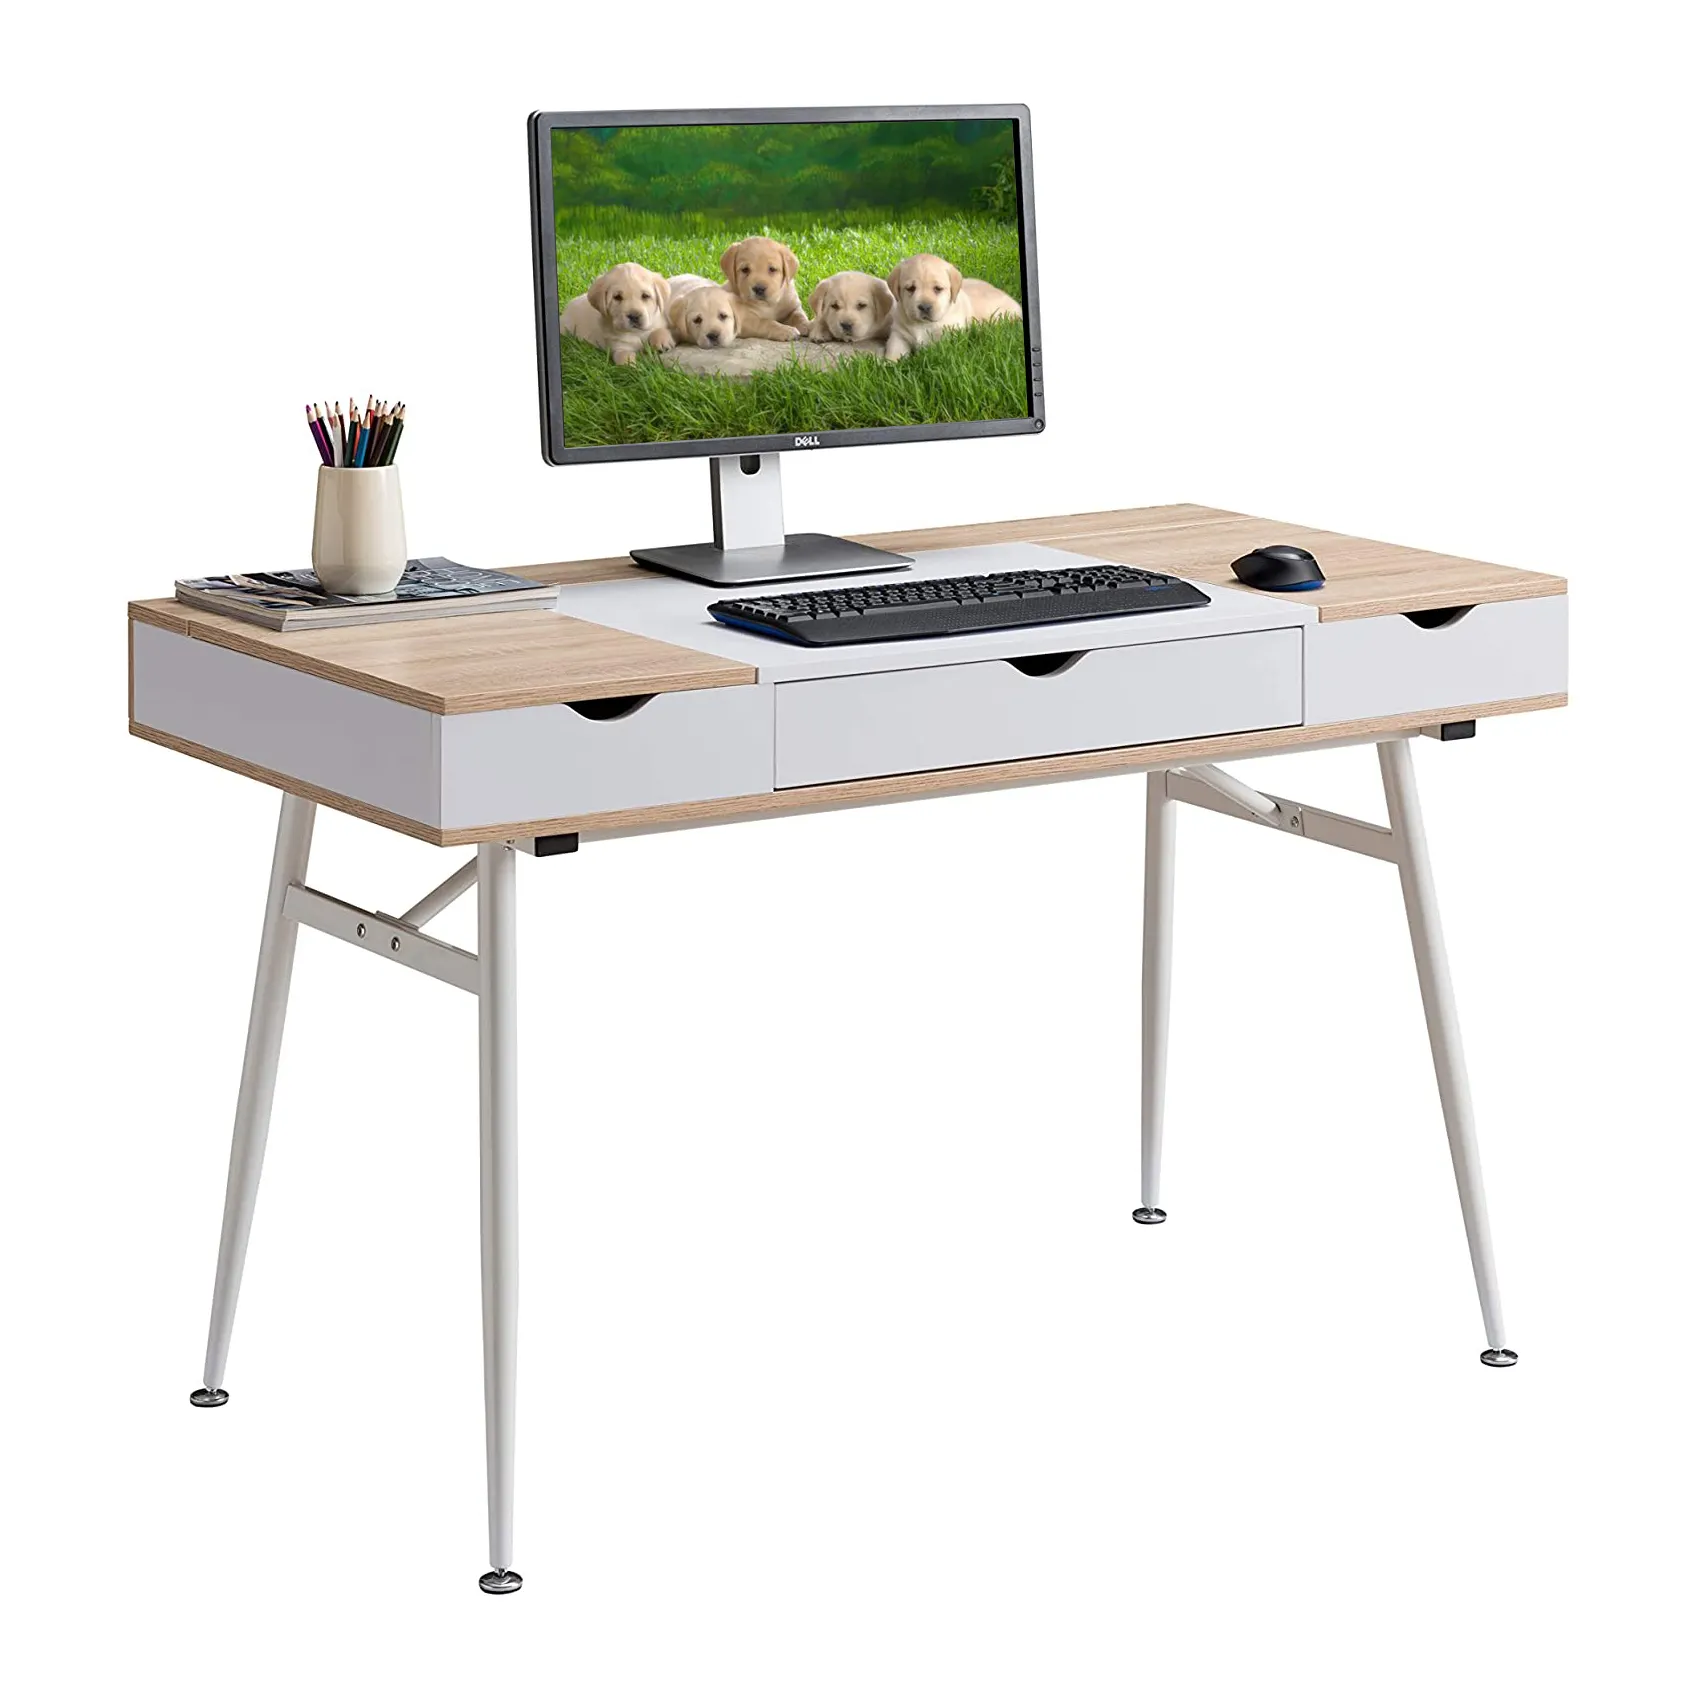 Saihe — bureau d'ordinateur moderne, Table d'étude, bureau d'ordinateur pliable, en bois, pour lit